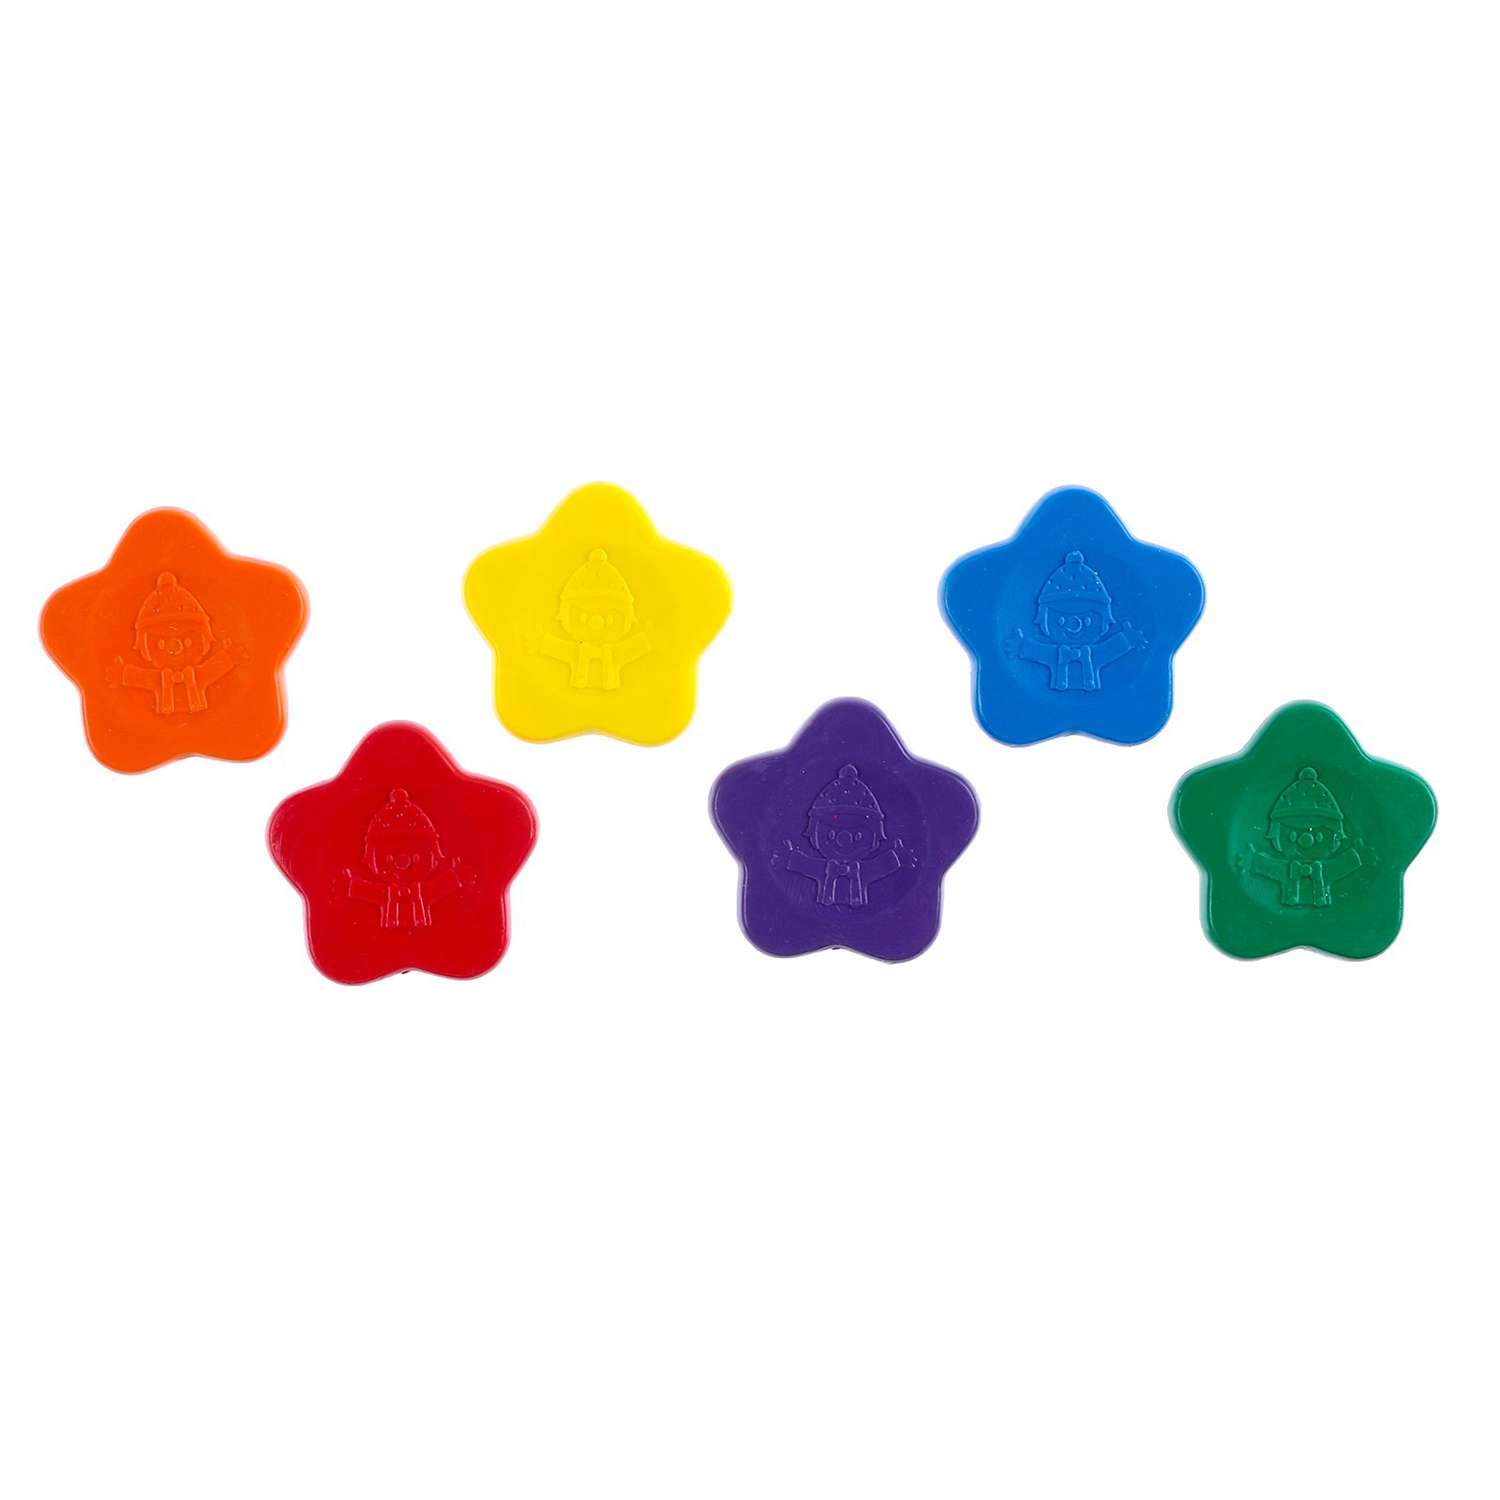 Восковые Школа Талантов карандаши «Звезды» набор 6 цветов - фото 3